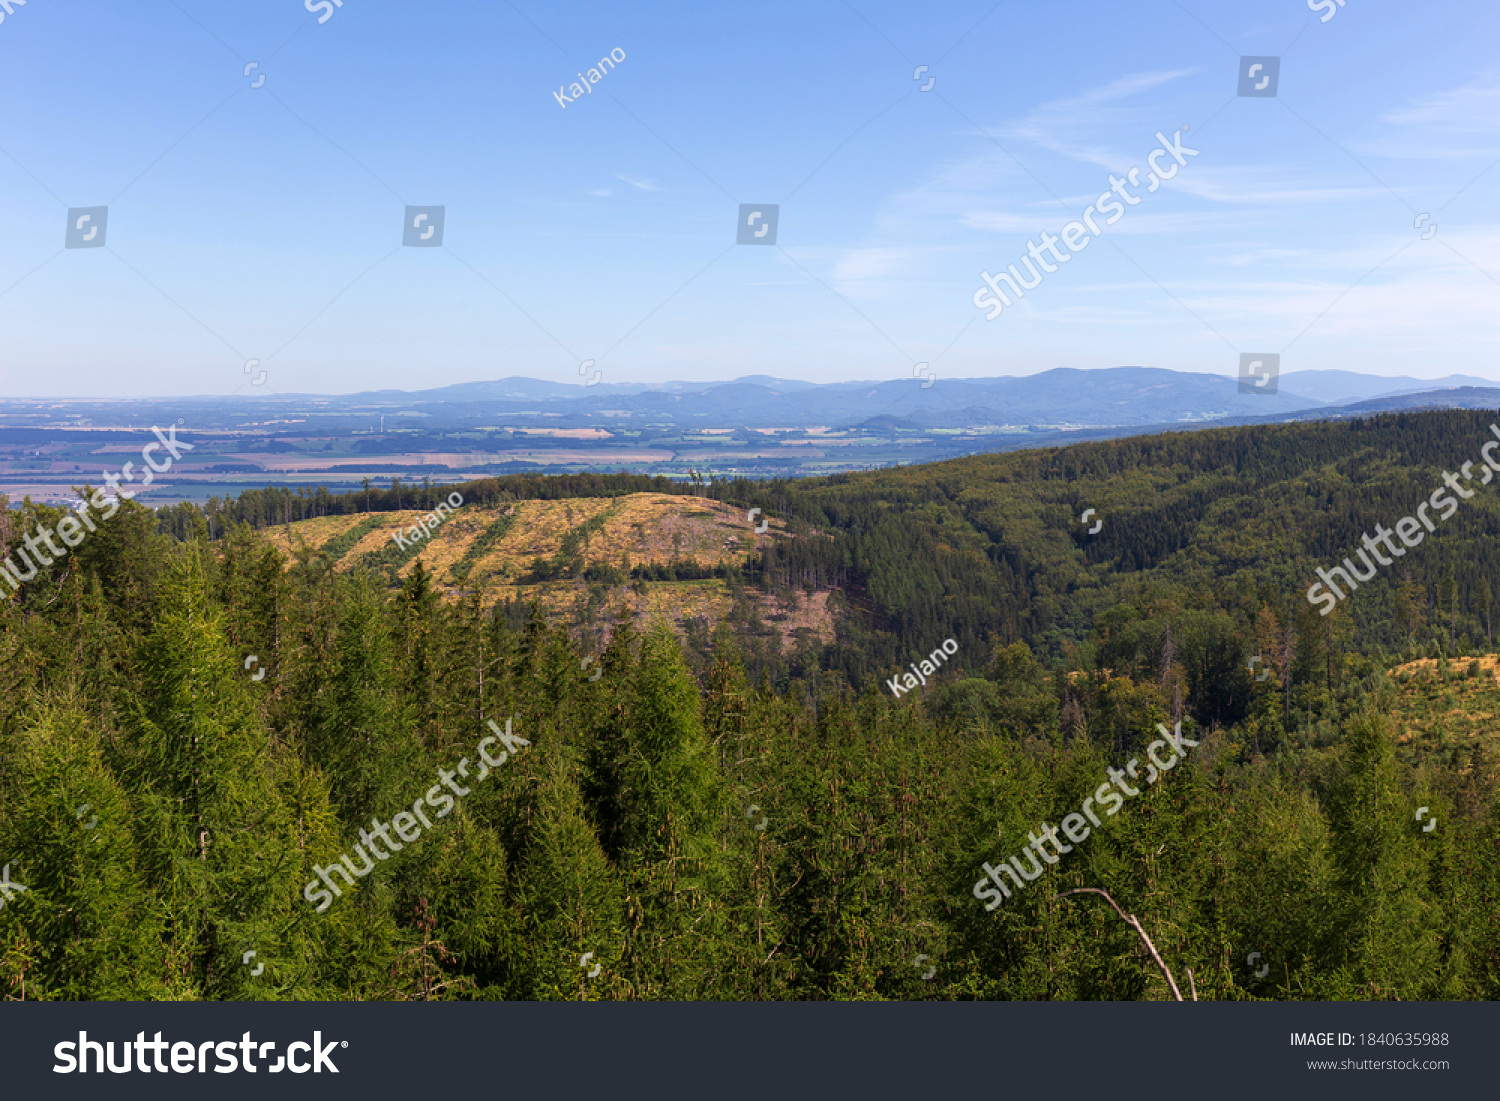 Landscape from the Hill High Rock, Vysoky Kamen, in Rychlebske Mountains, Czech Republic #1840635988